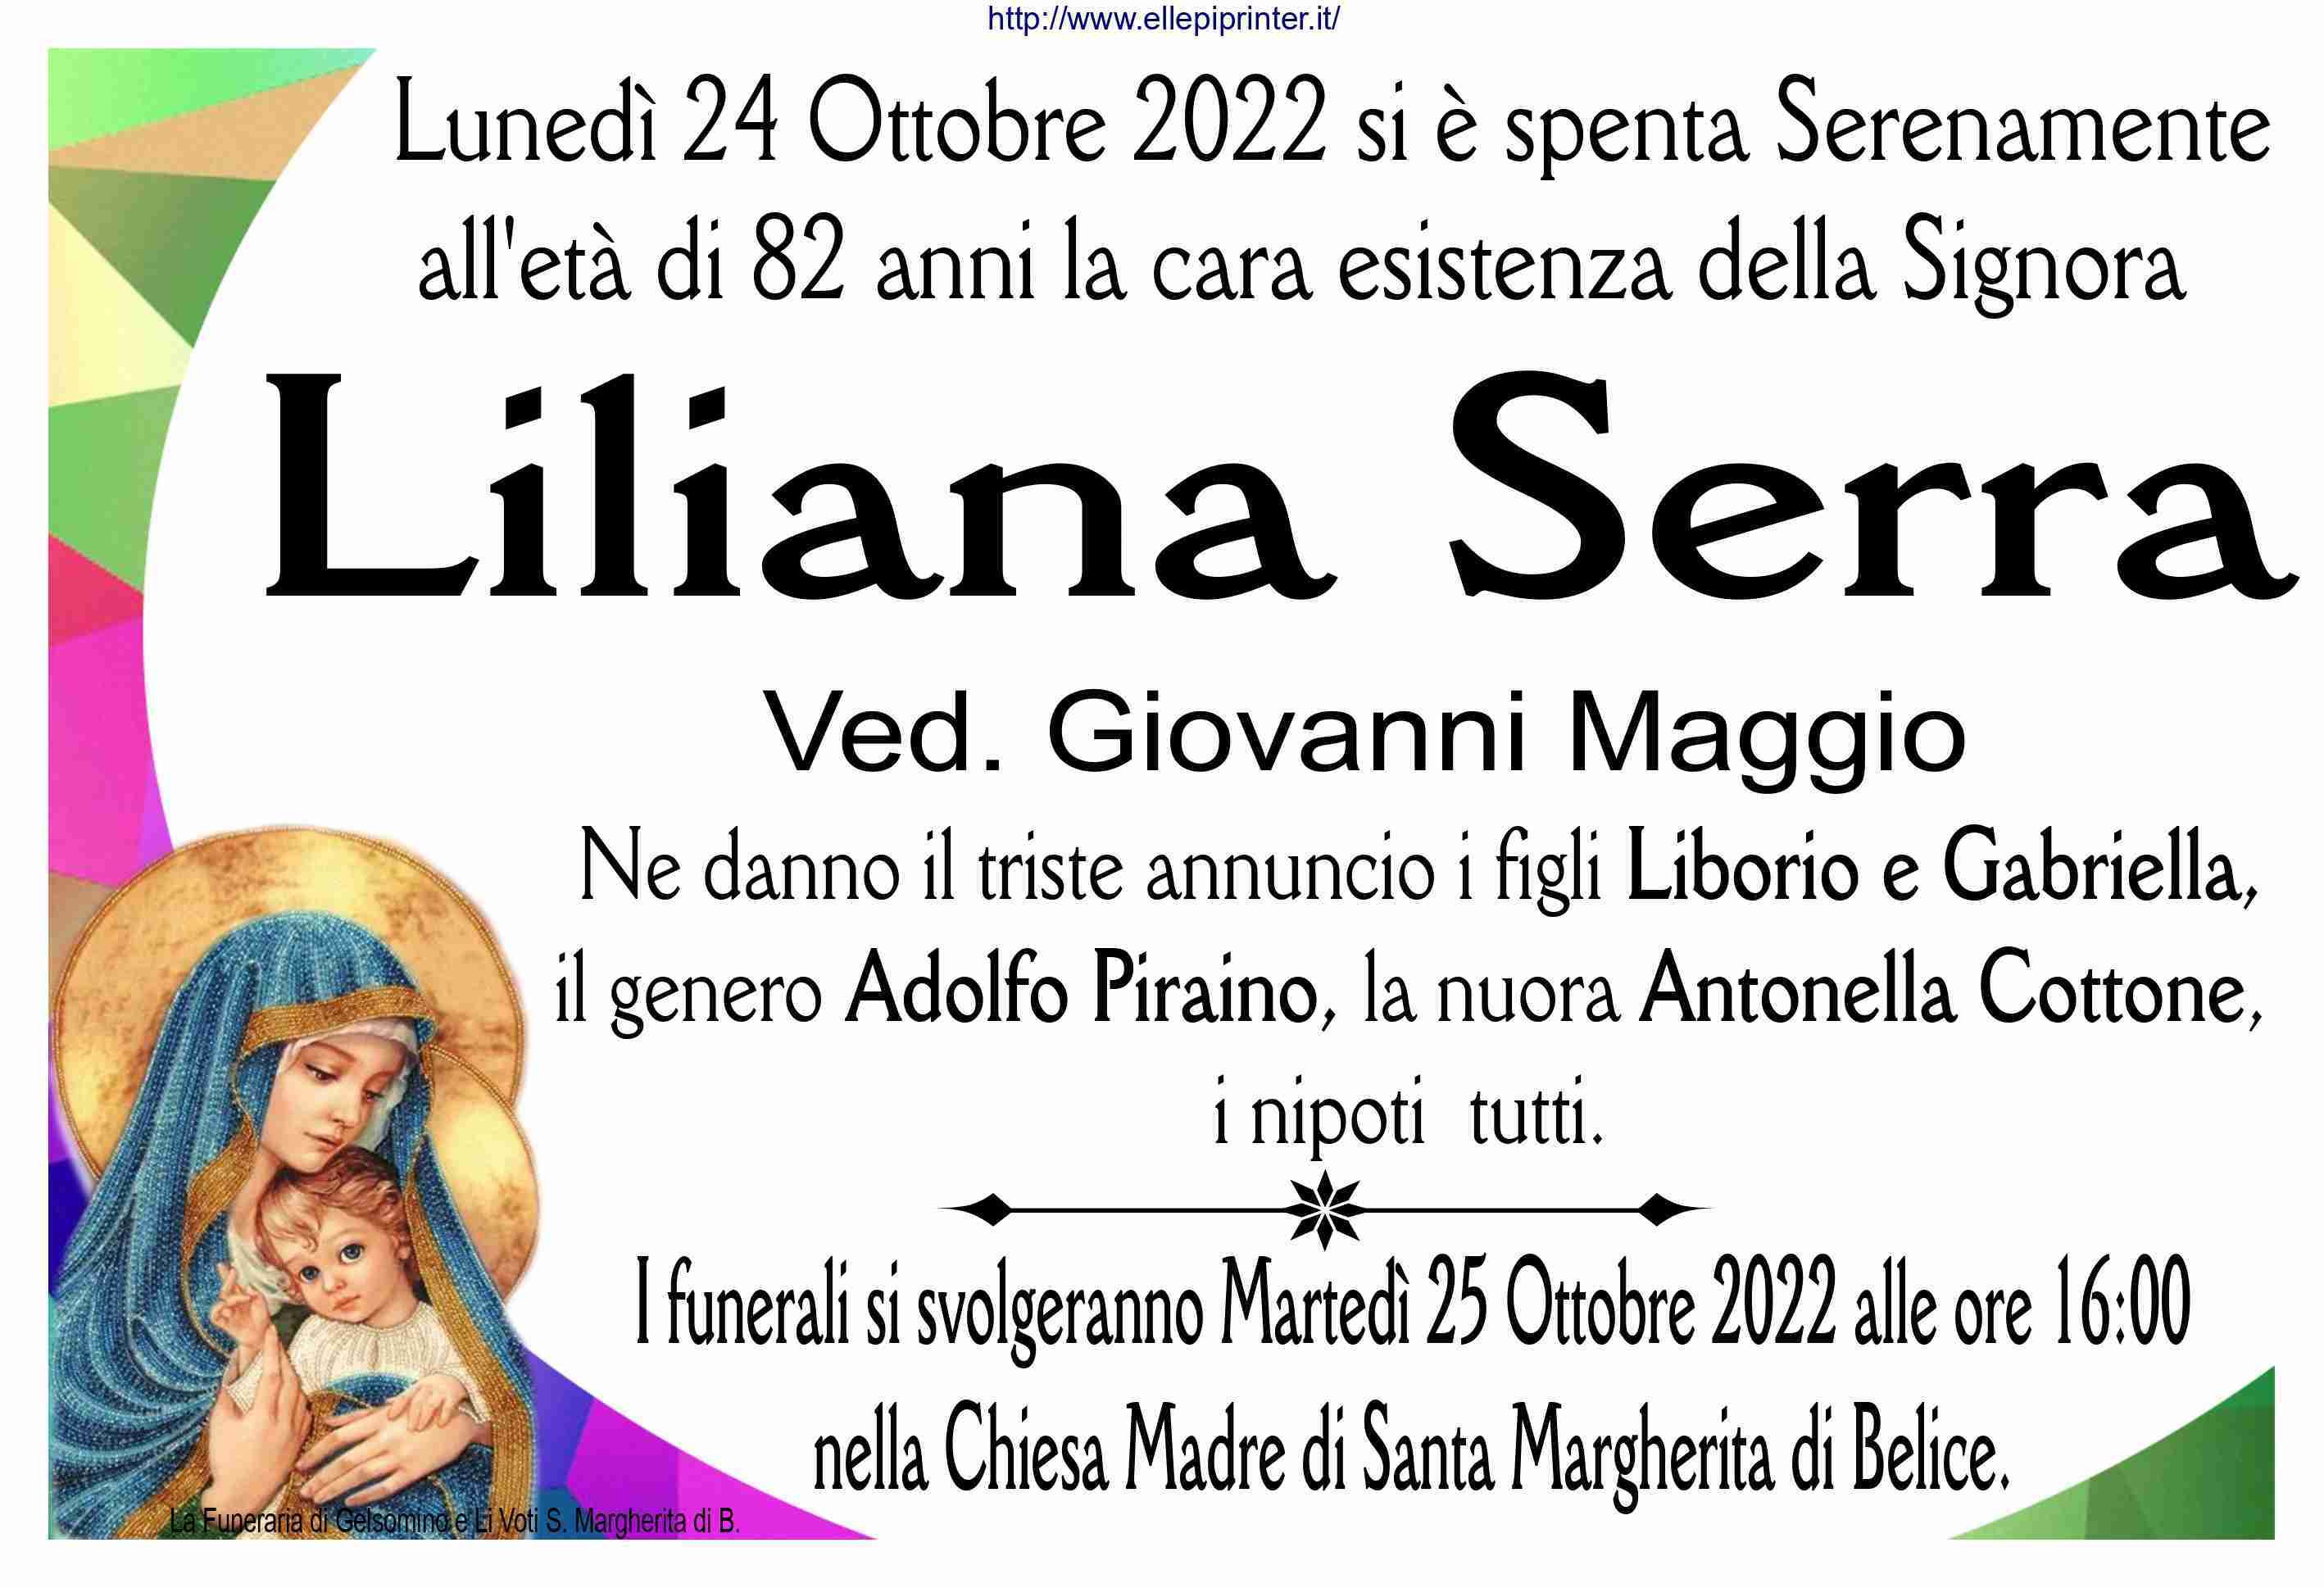 Liliana Serra